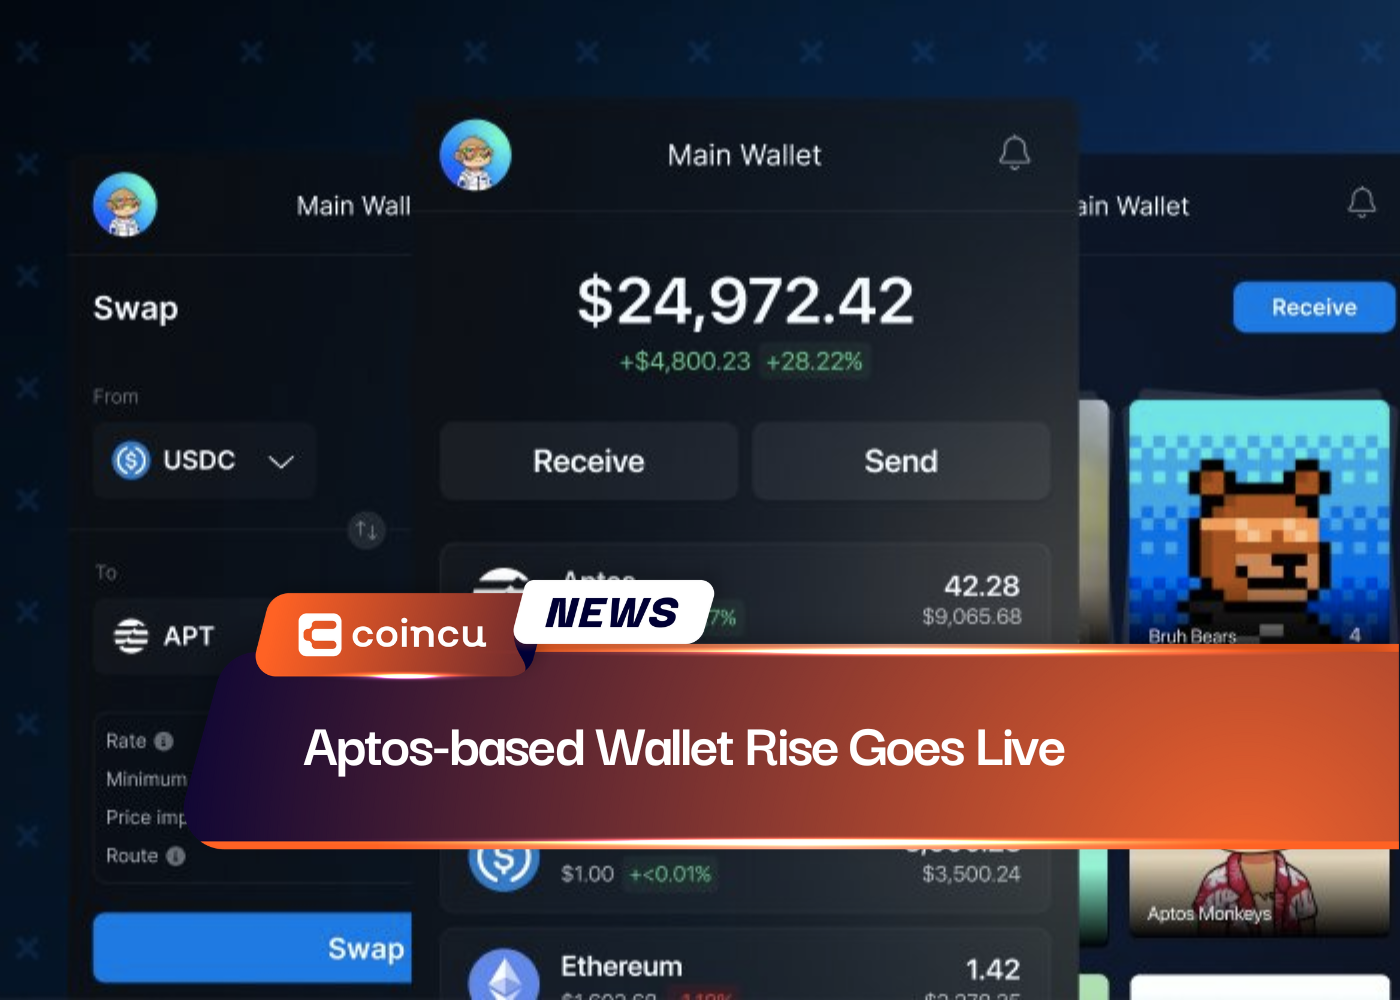 Aptos-based Wallet Rise Goes Live